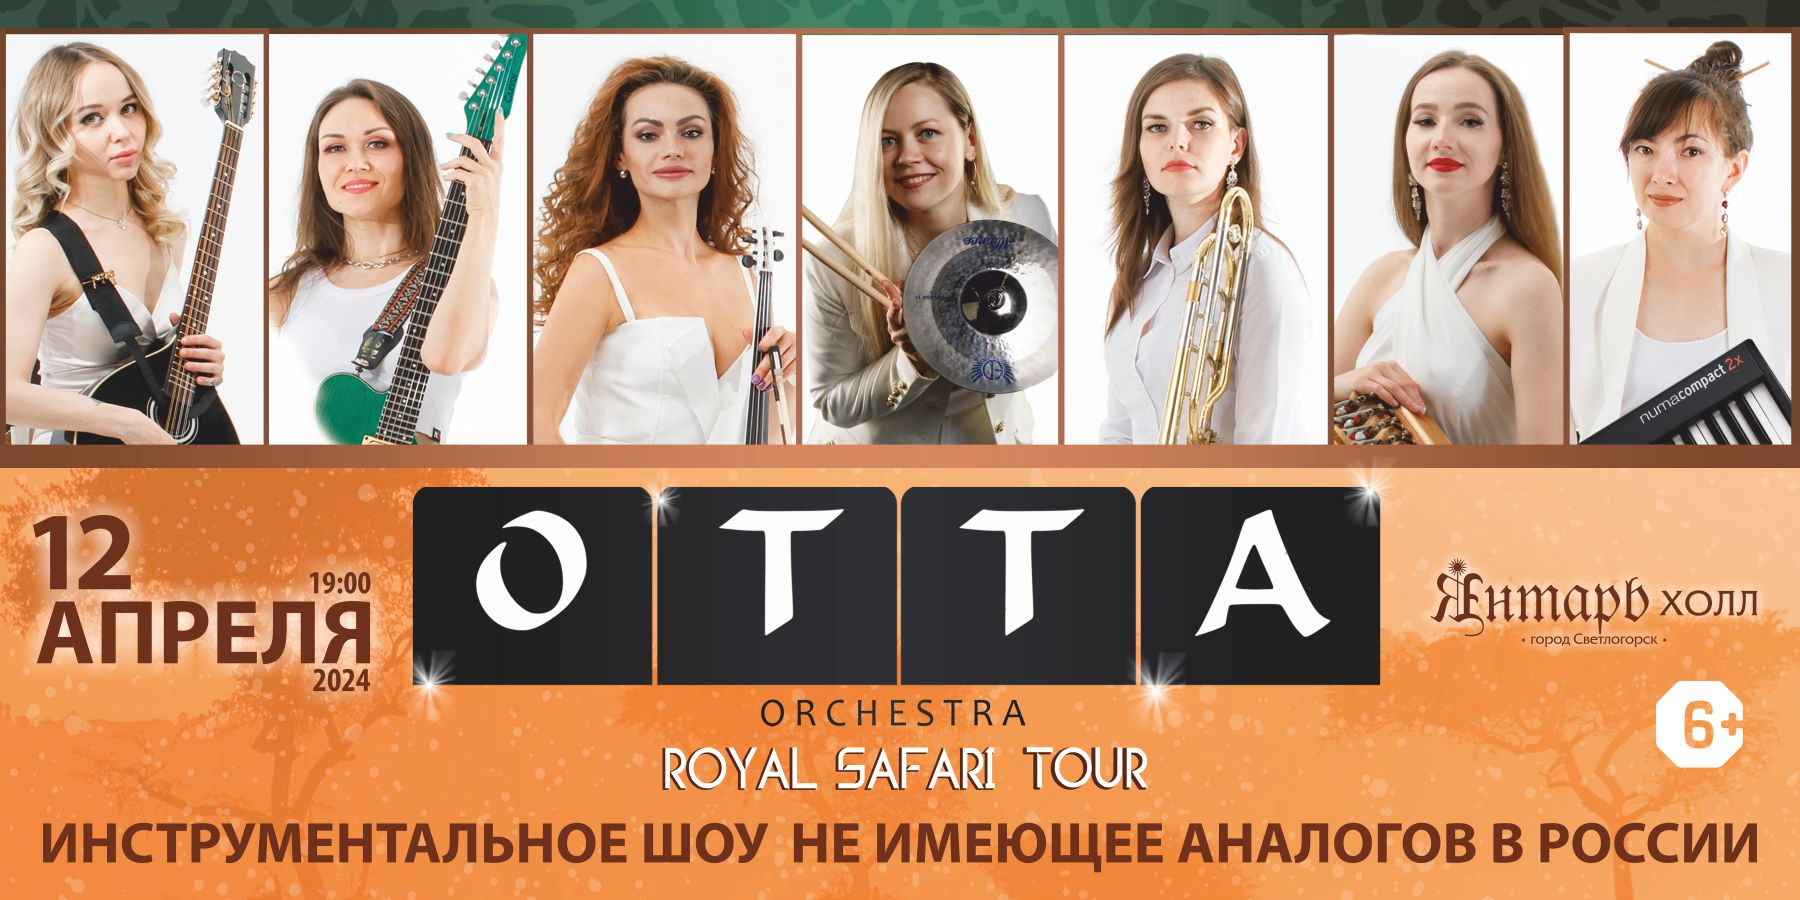 ОТТА-orchestra тур 2024 «Royal Safari»